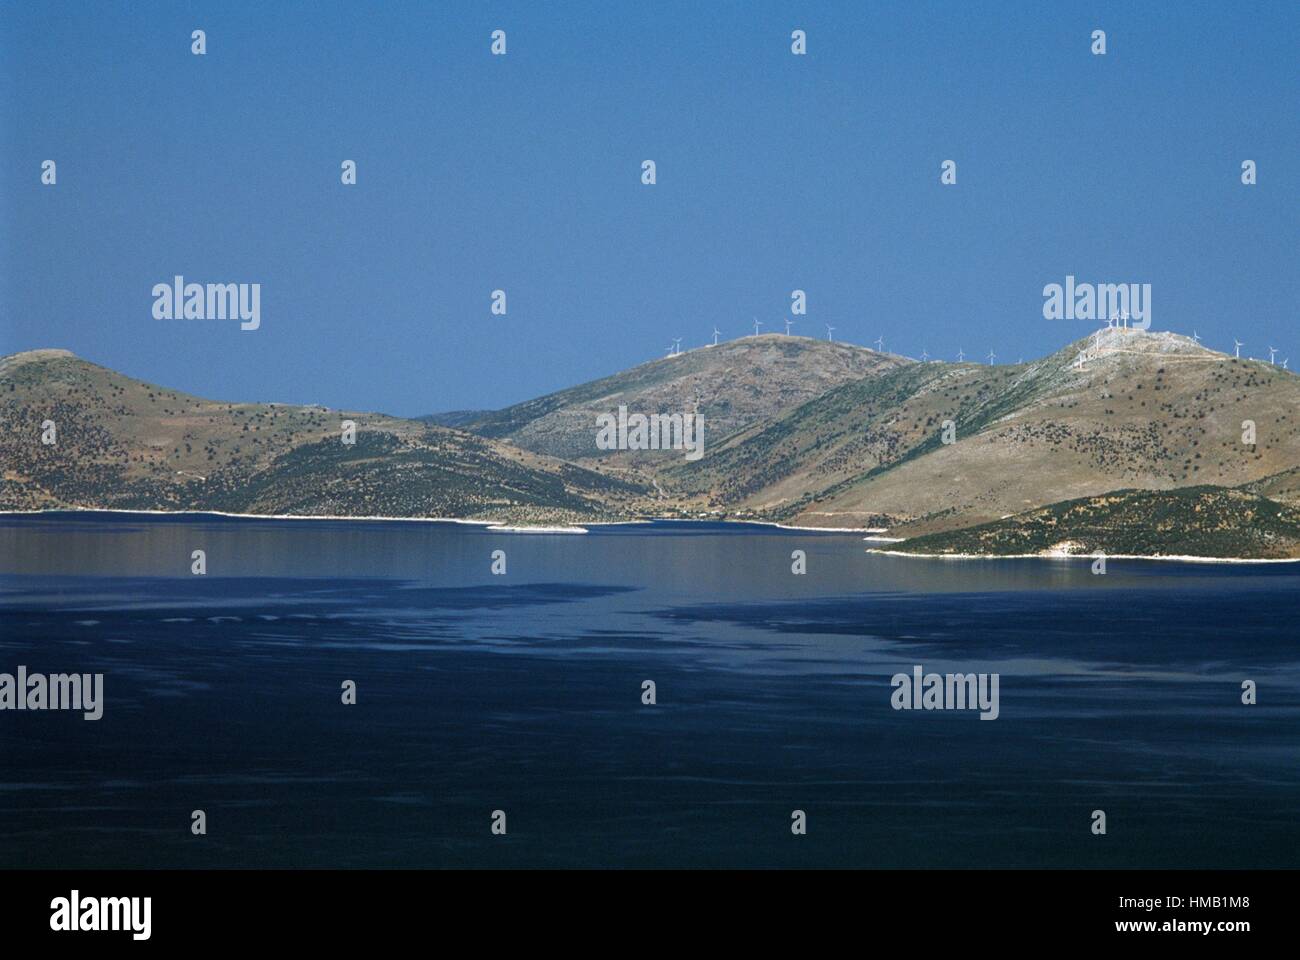 Euboea (Evia) island seen from Sesi, Central Greece, Greece. Stock Photo